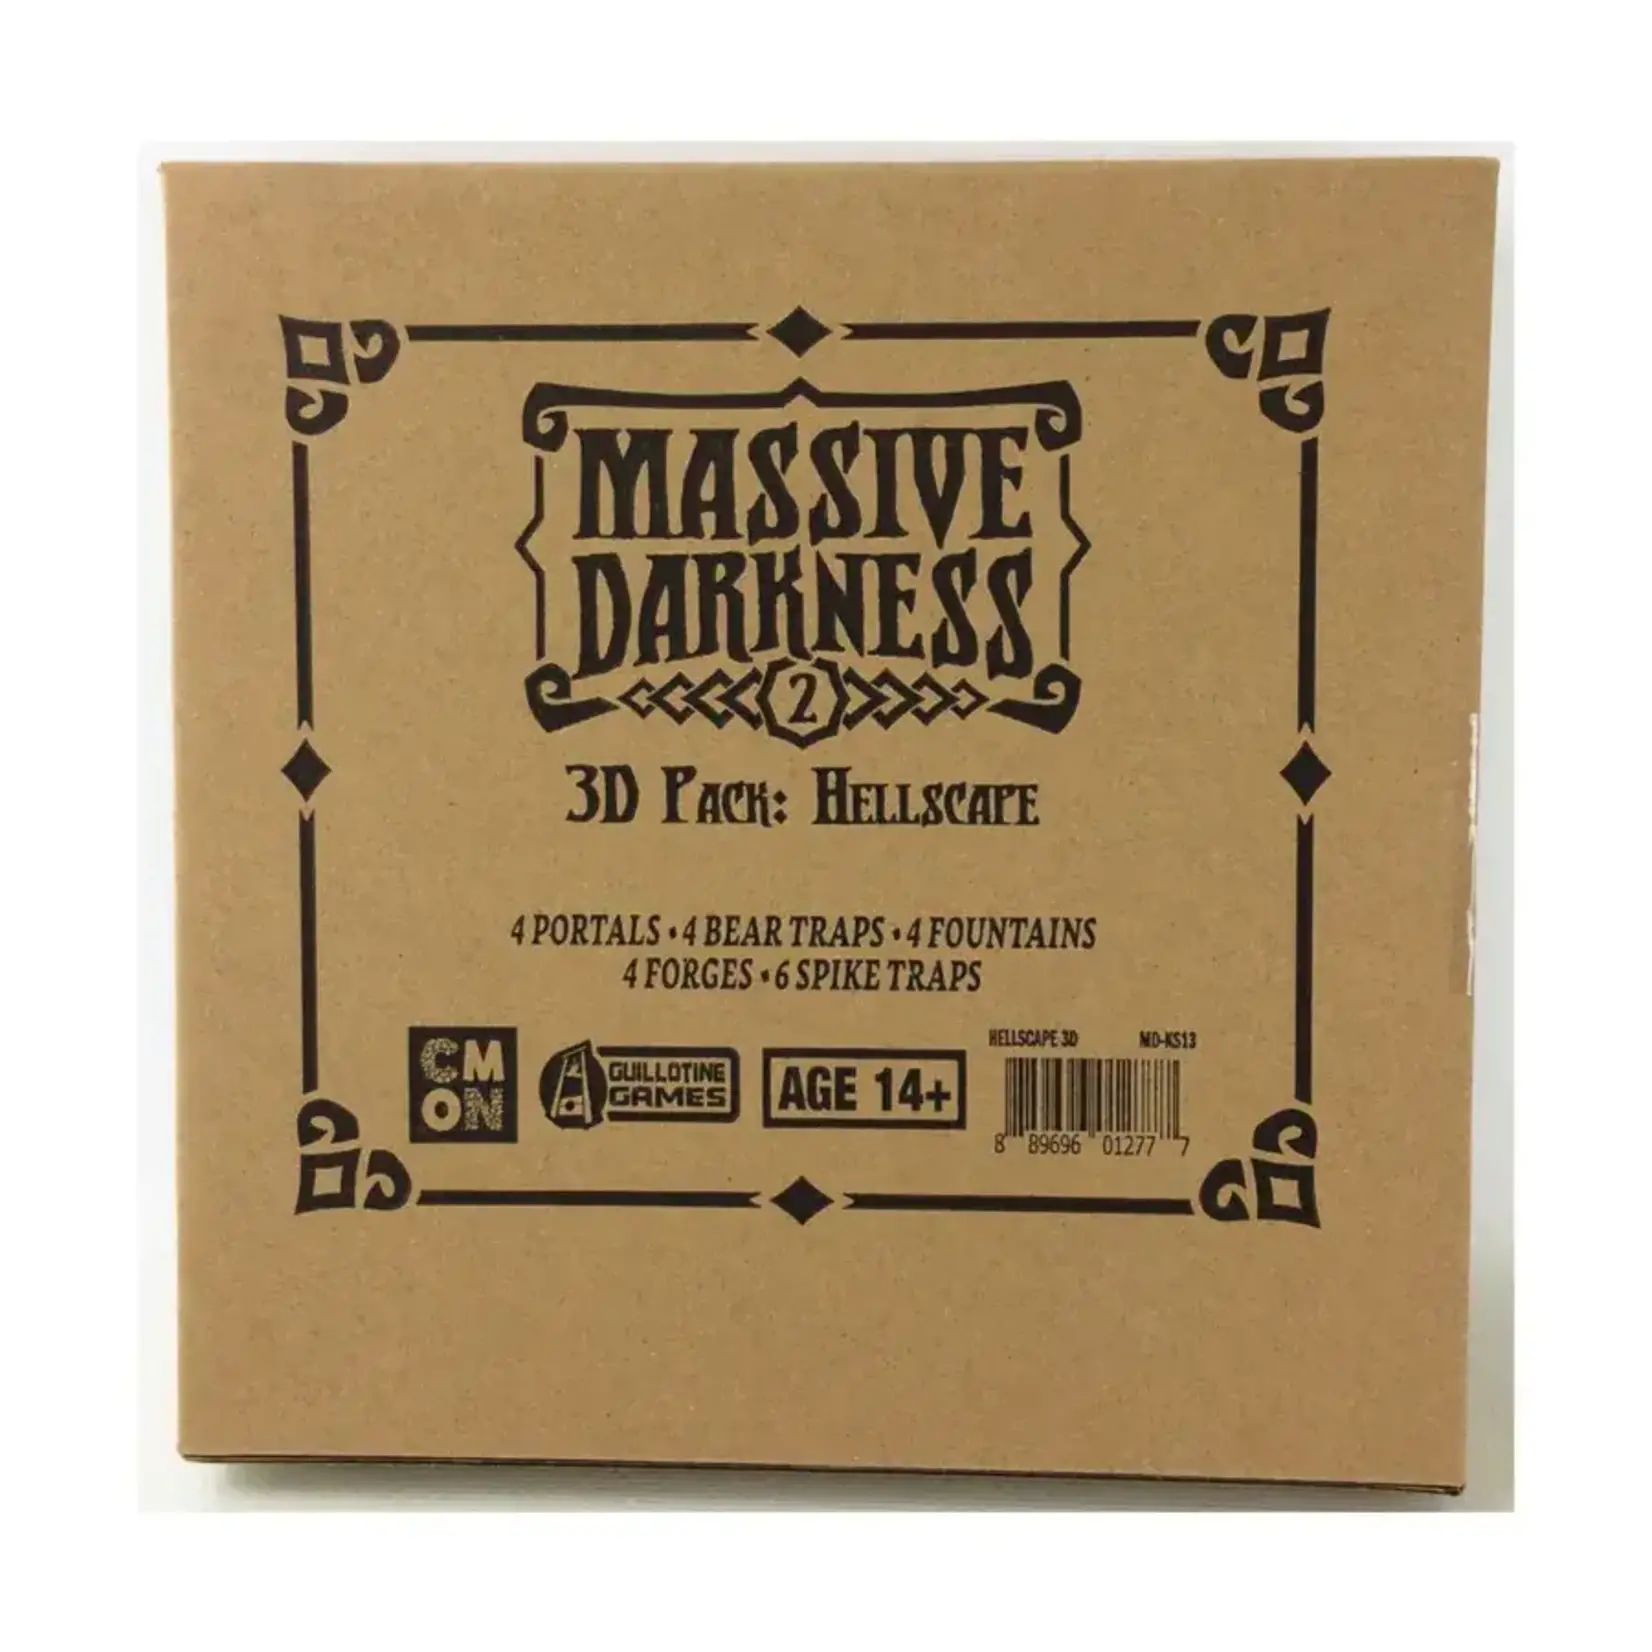 Massive Darkness 3D Pack: Hellscape